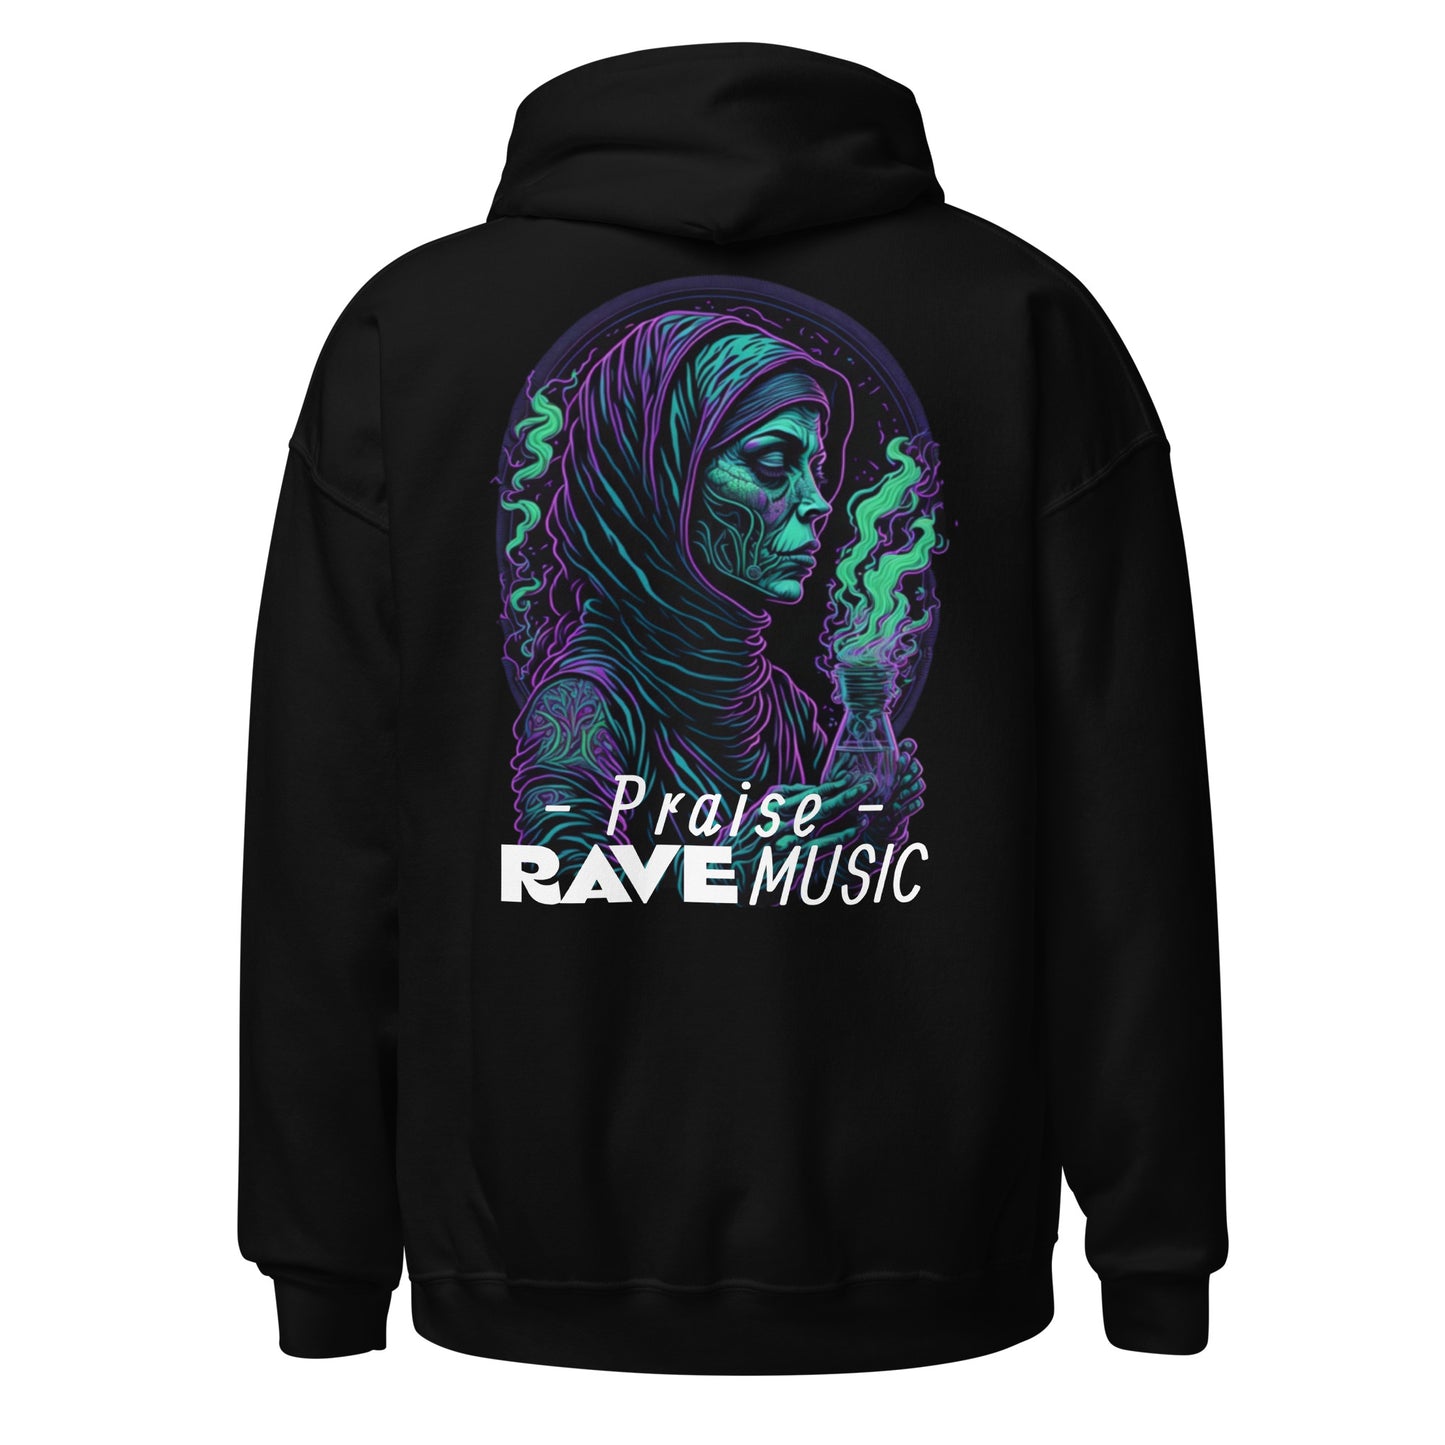 Praise Rave Music - Unisex Hoodie